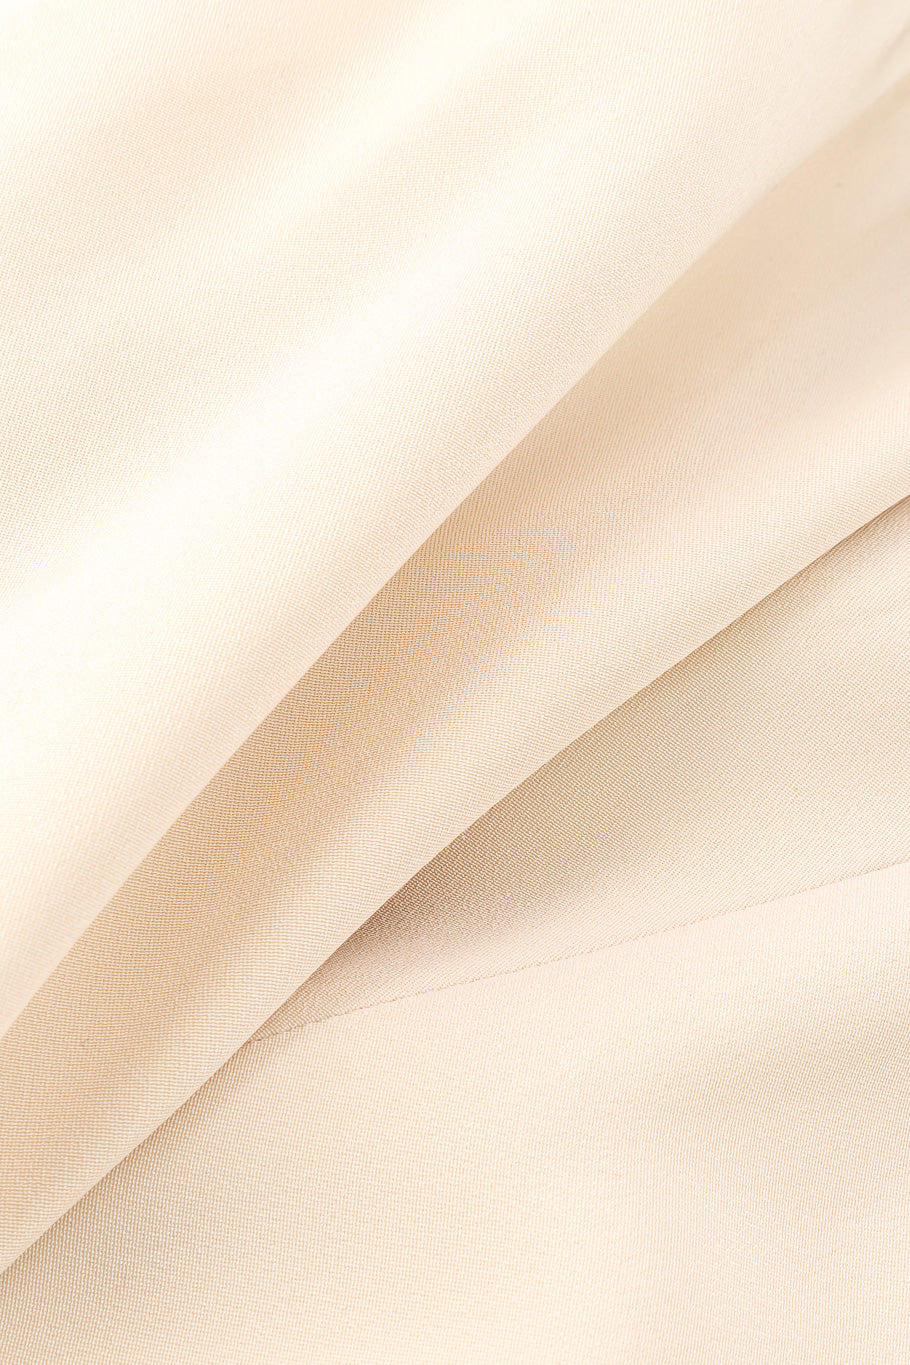 Vintage Sansappelle Beaded Chainmail Dress cream fabric closeup @Recessla